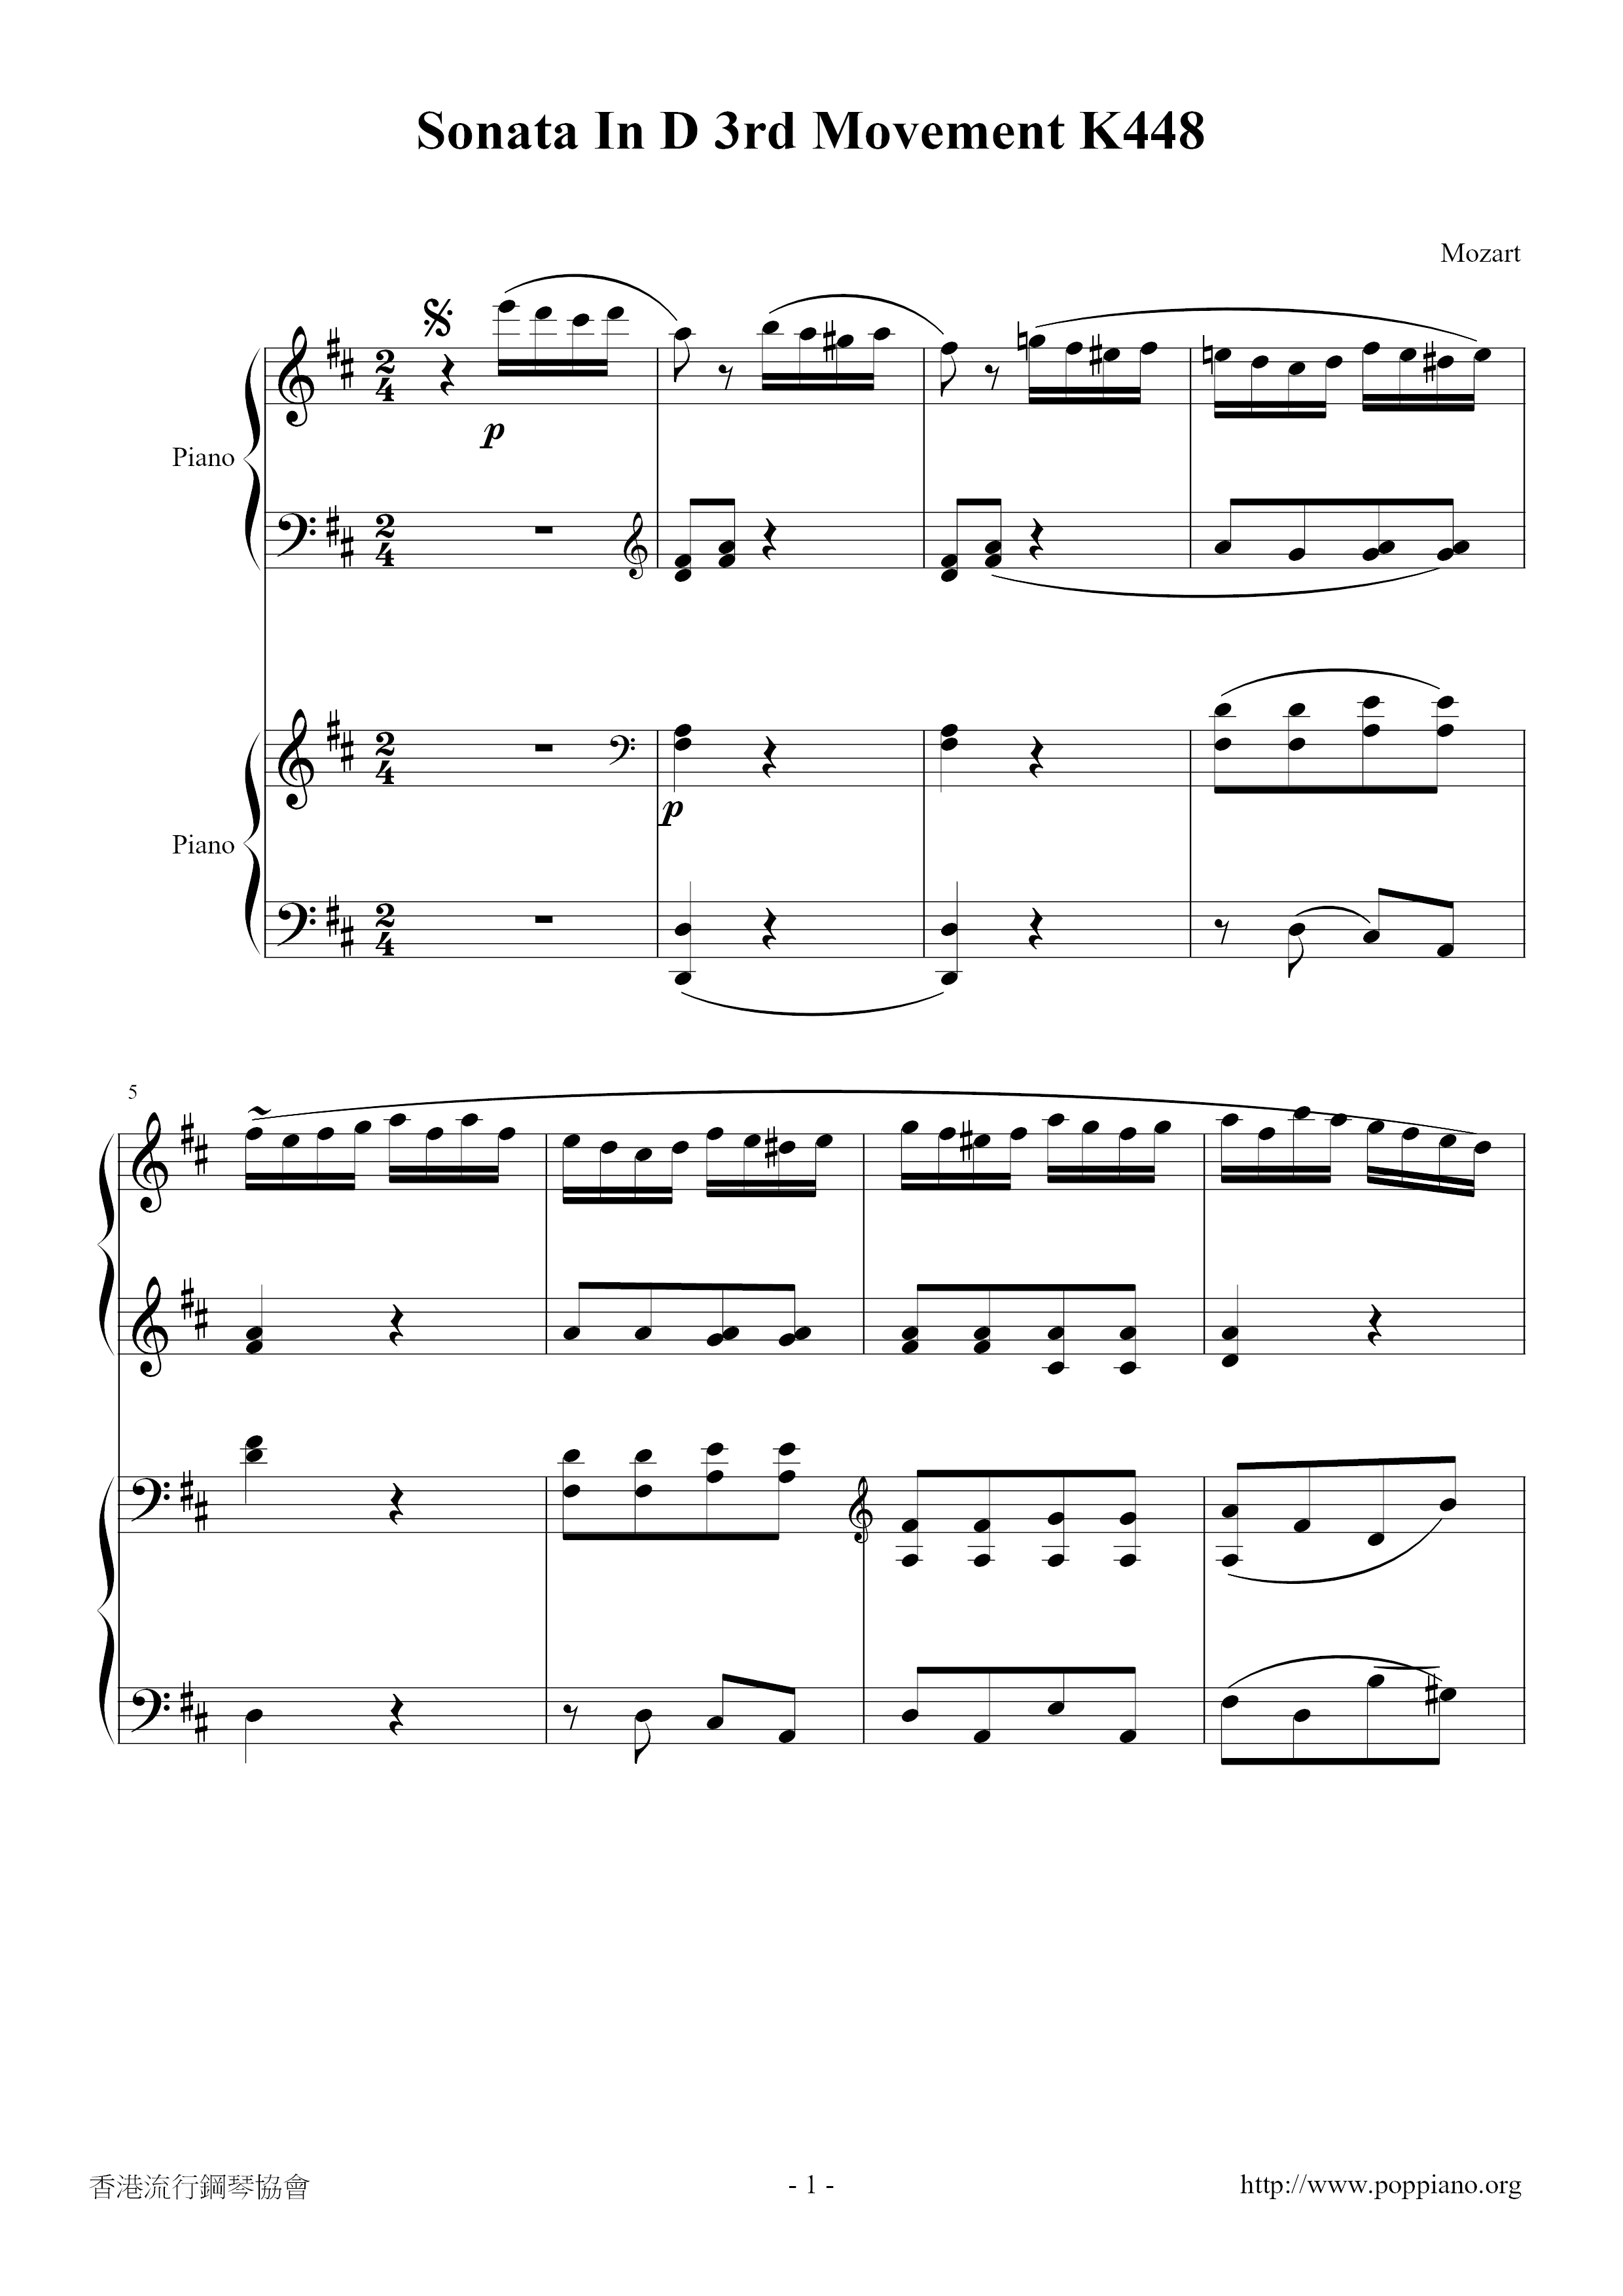 Sonata in D 3rd Movement K448ピアノ譜